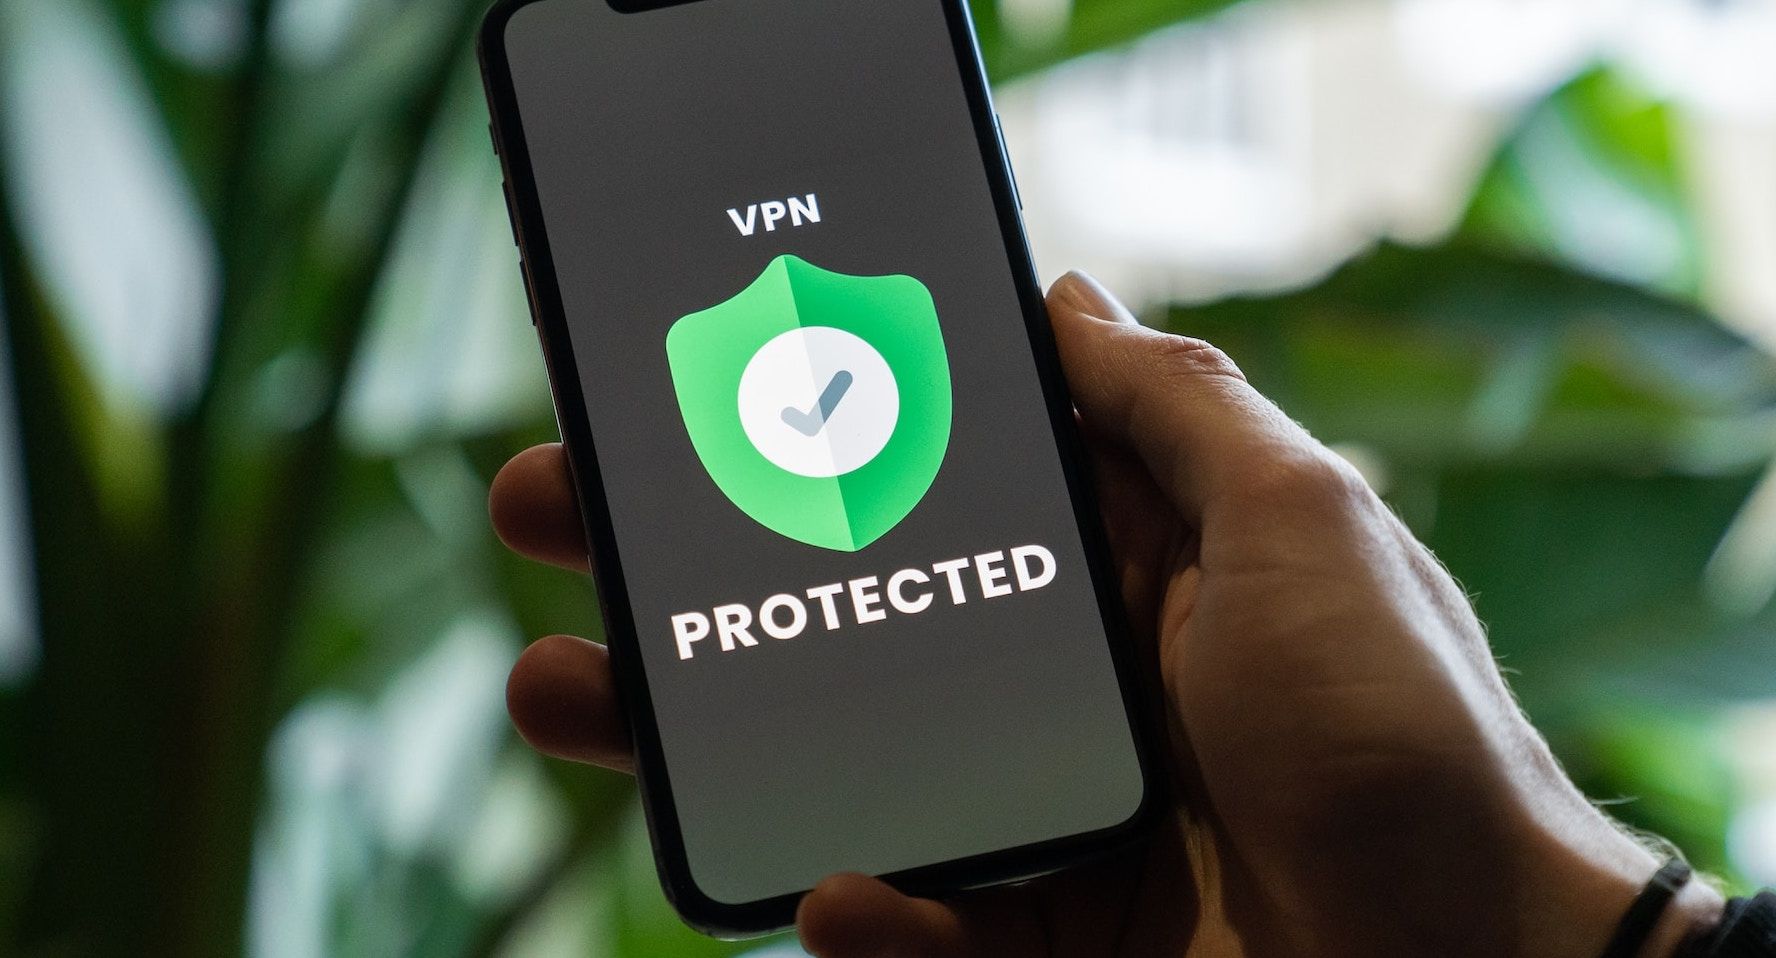 VPN on smartphone